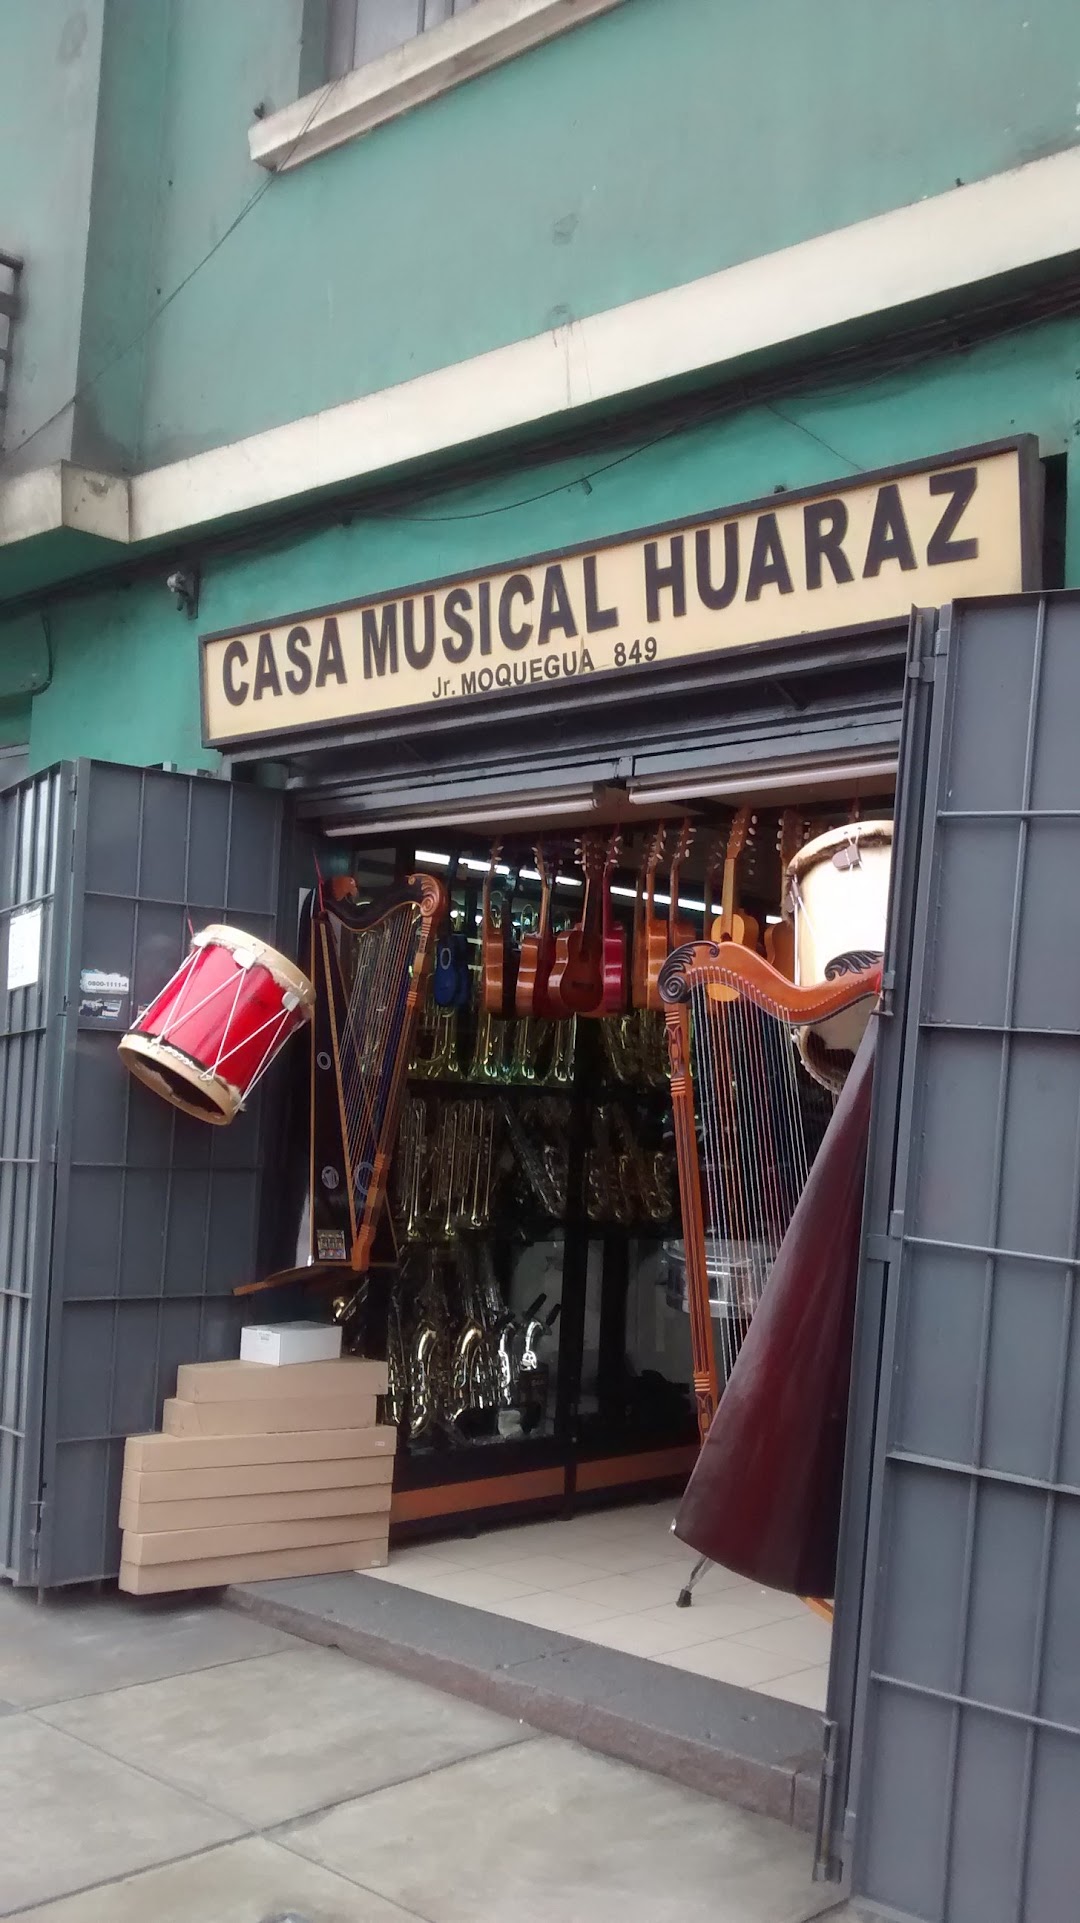 CASA MUSICAL HUARAZ